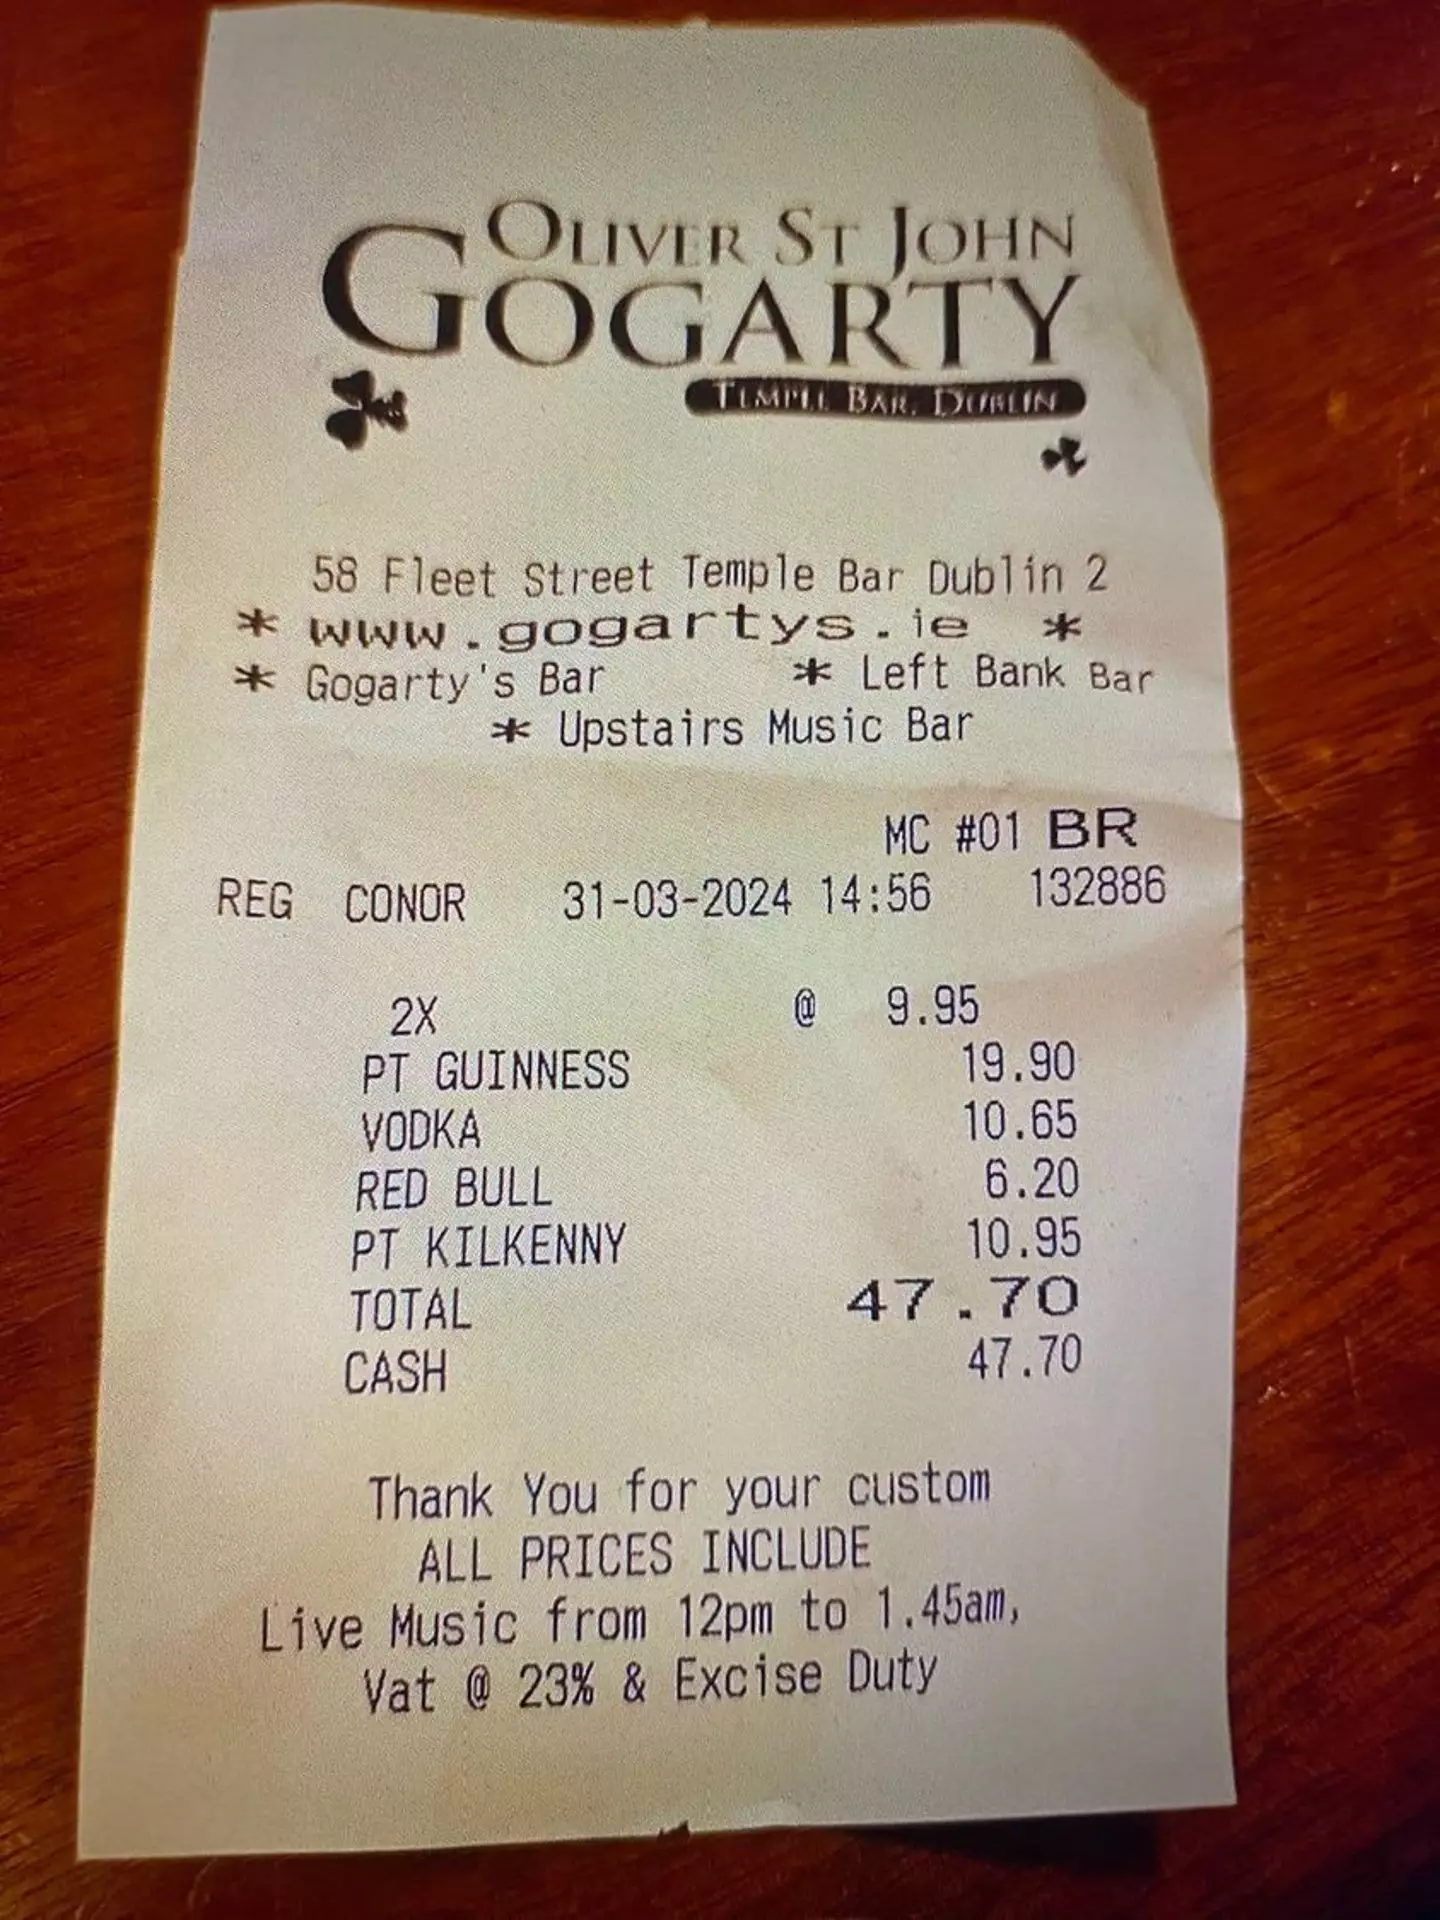 The politician shared the pub receipt.